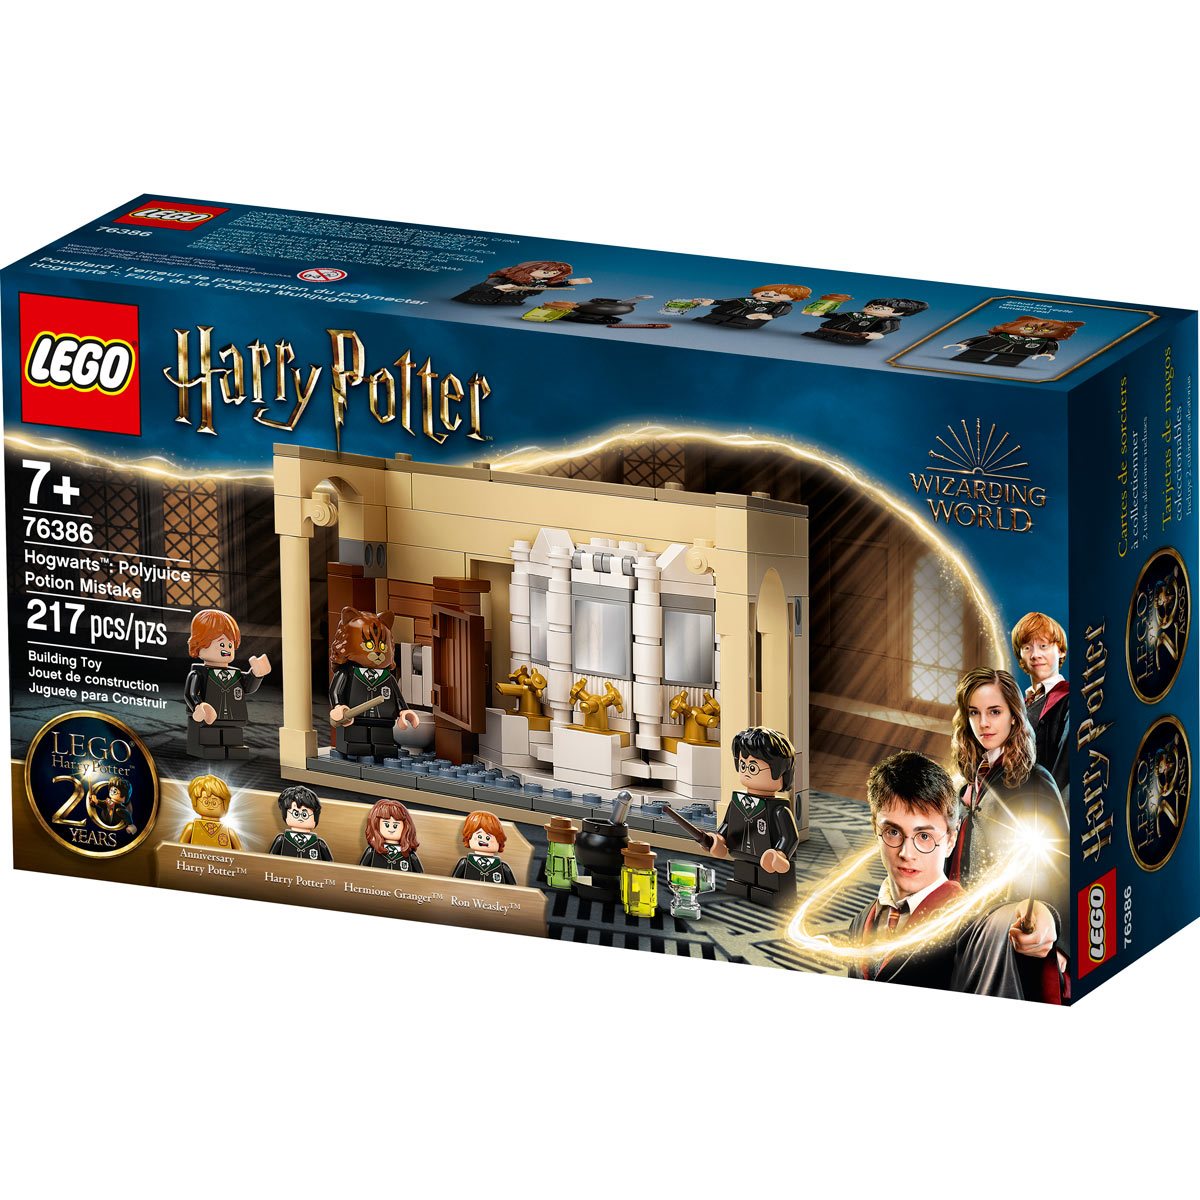 invierno recibir pase a ver LEGO 76386 Harry Potter Hogwarts: Polyjuice Potion Mistake